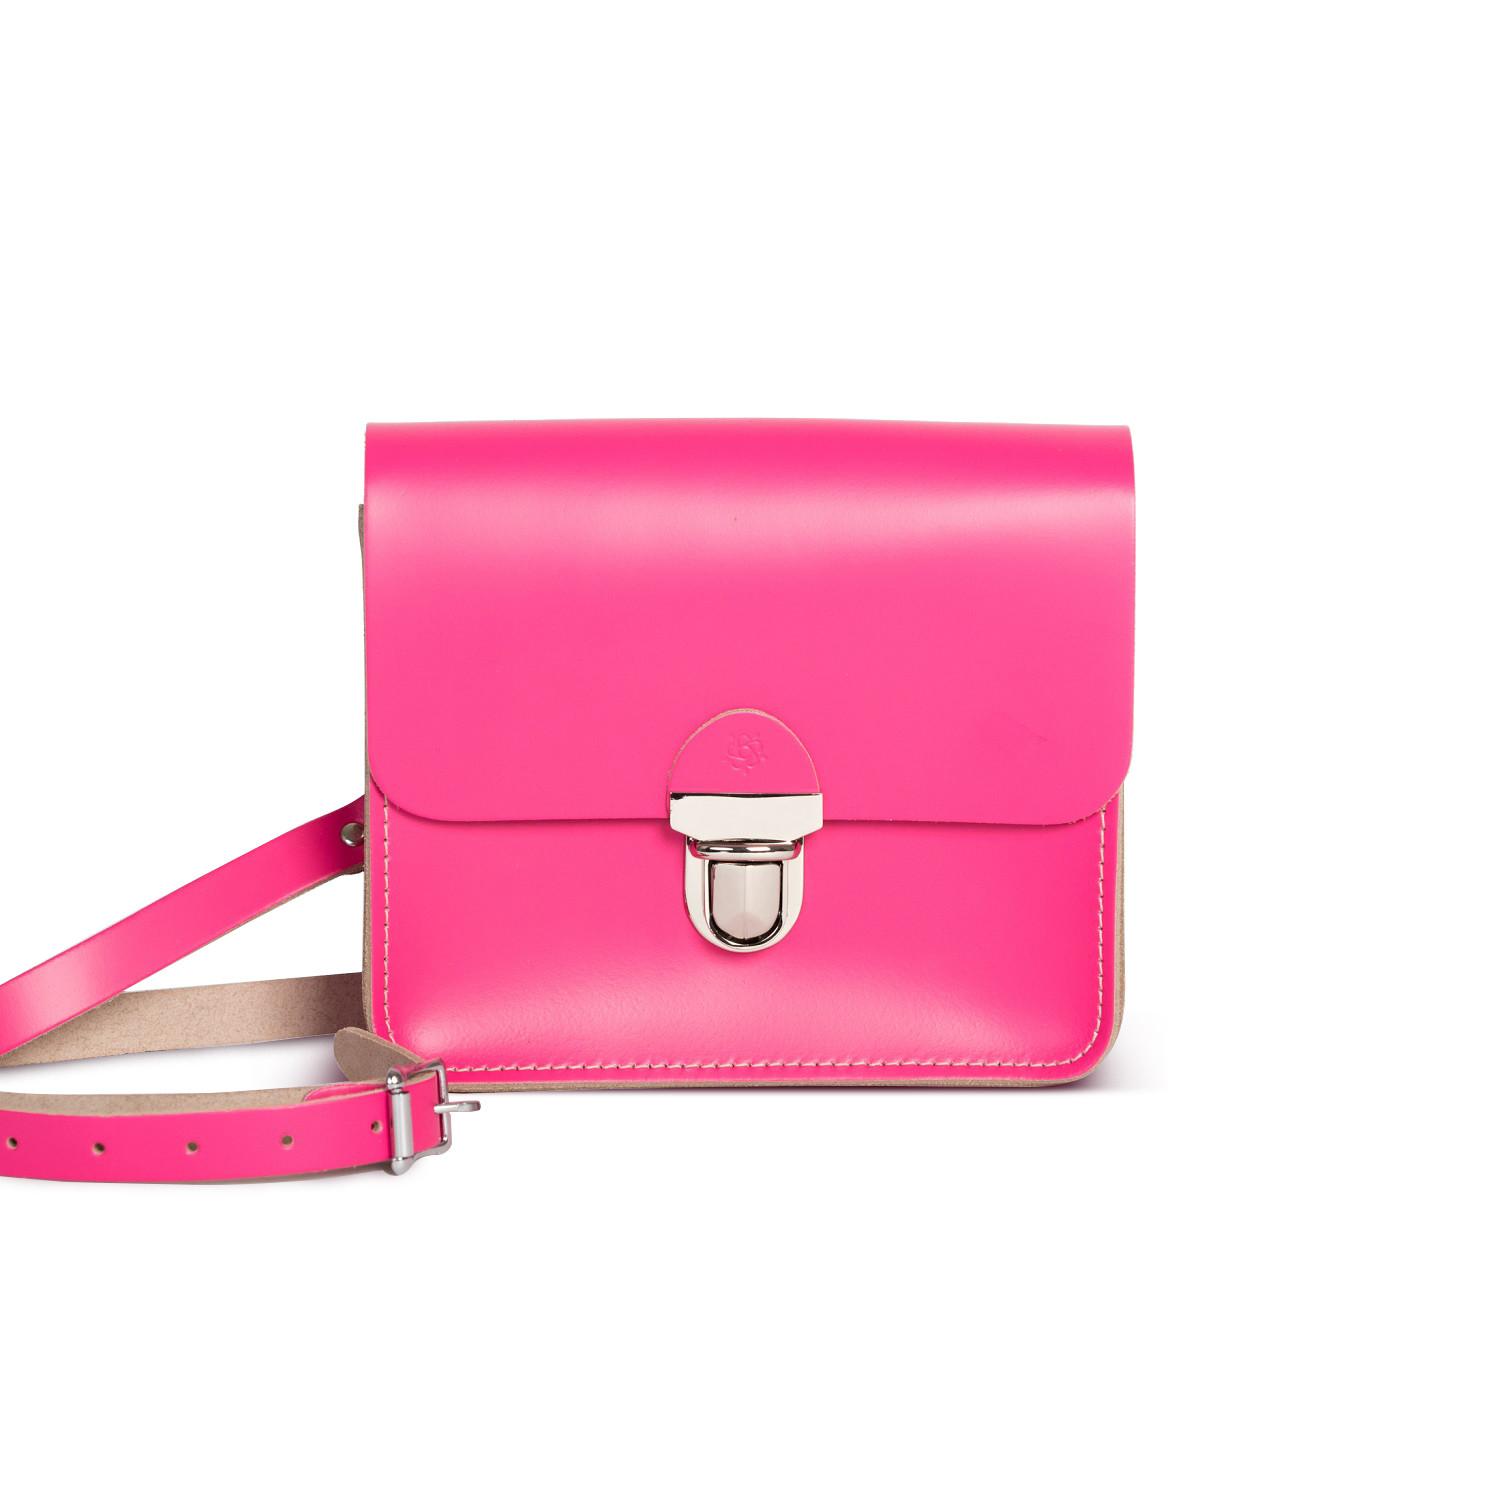 Sofia Bright Pink Leather Crossbody Bag by Gweniss | Gweniss